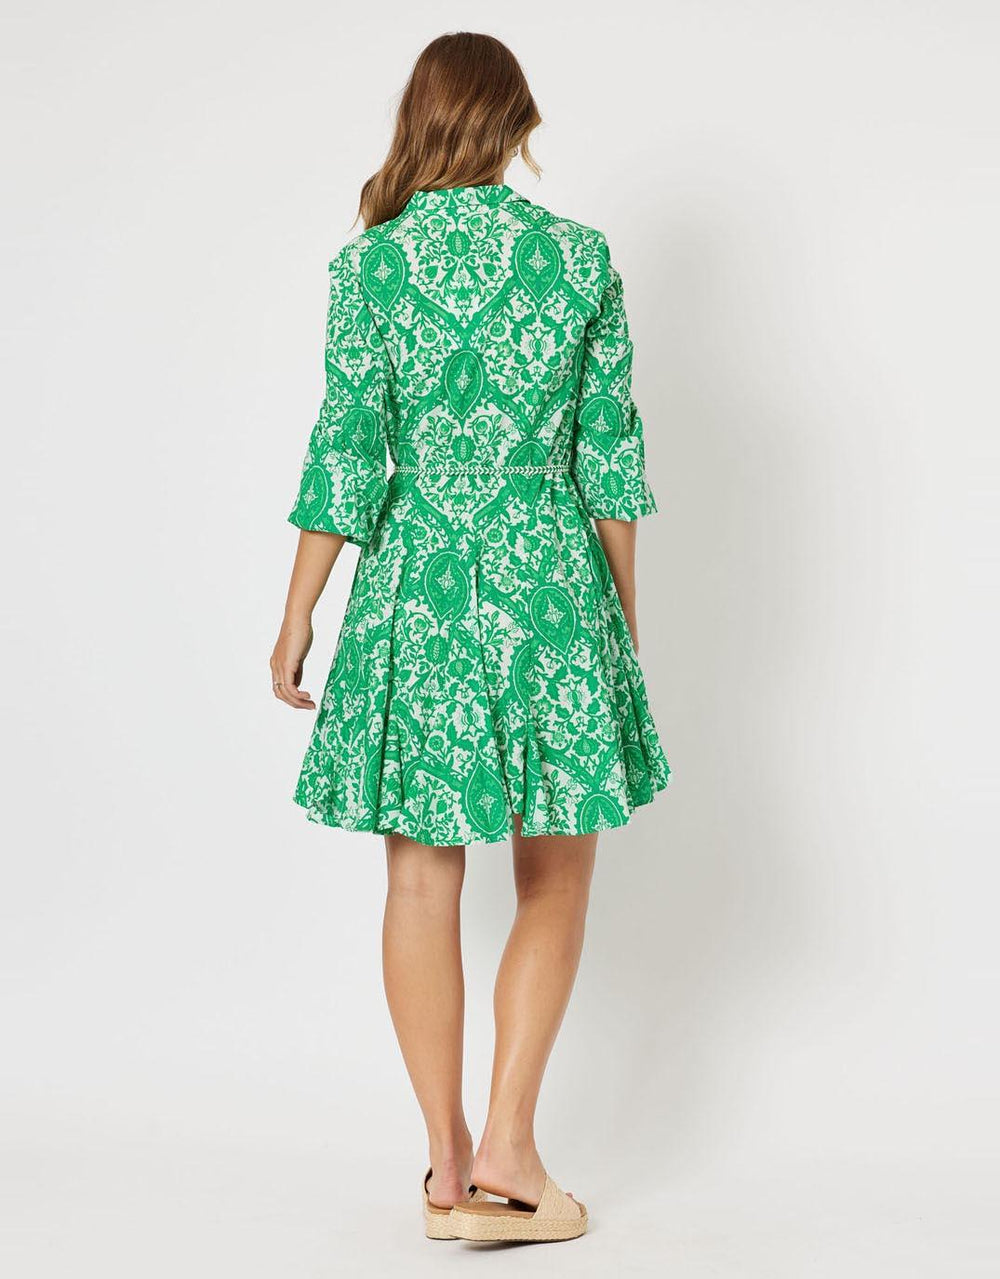 Threadz - Hola Dress - Green - paulaglazebrook Dresses